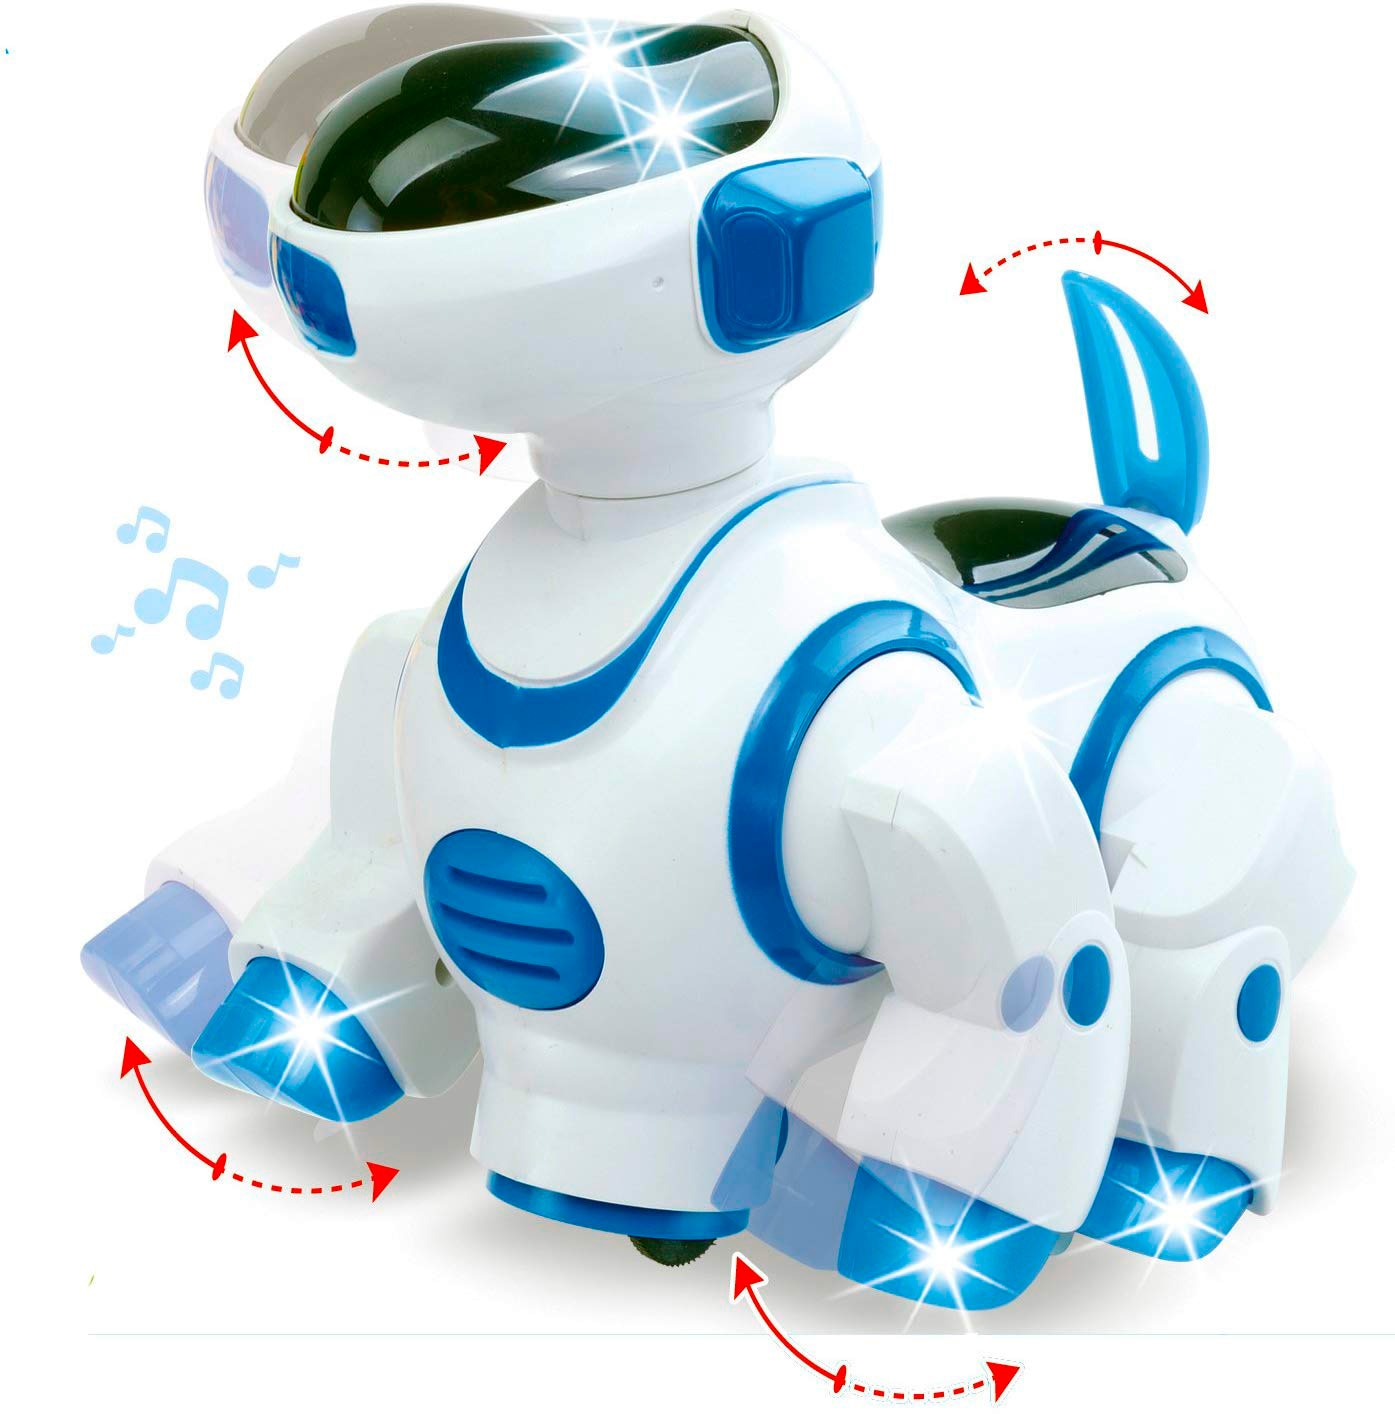 vivitar dancing robot dog